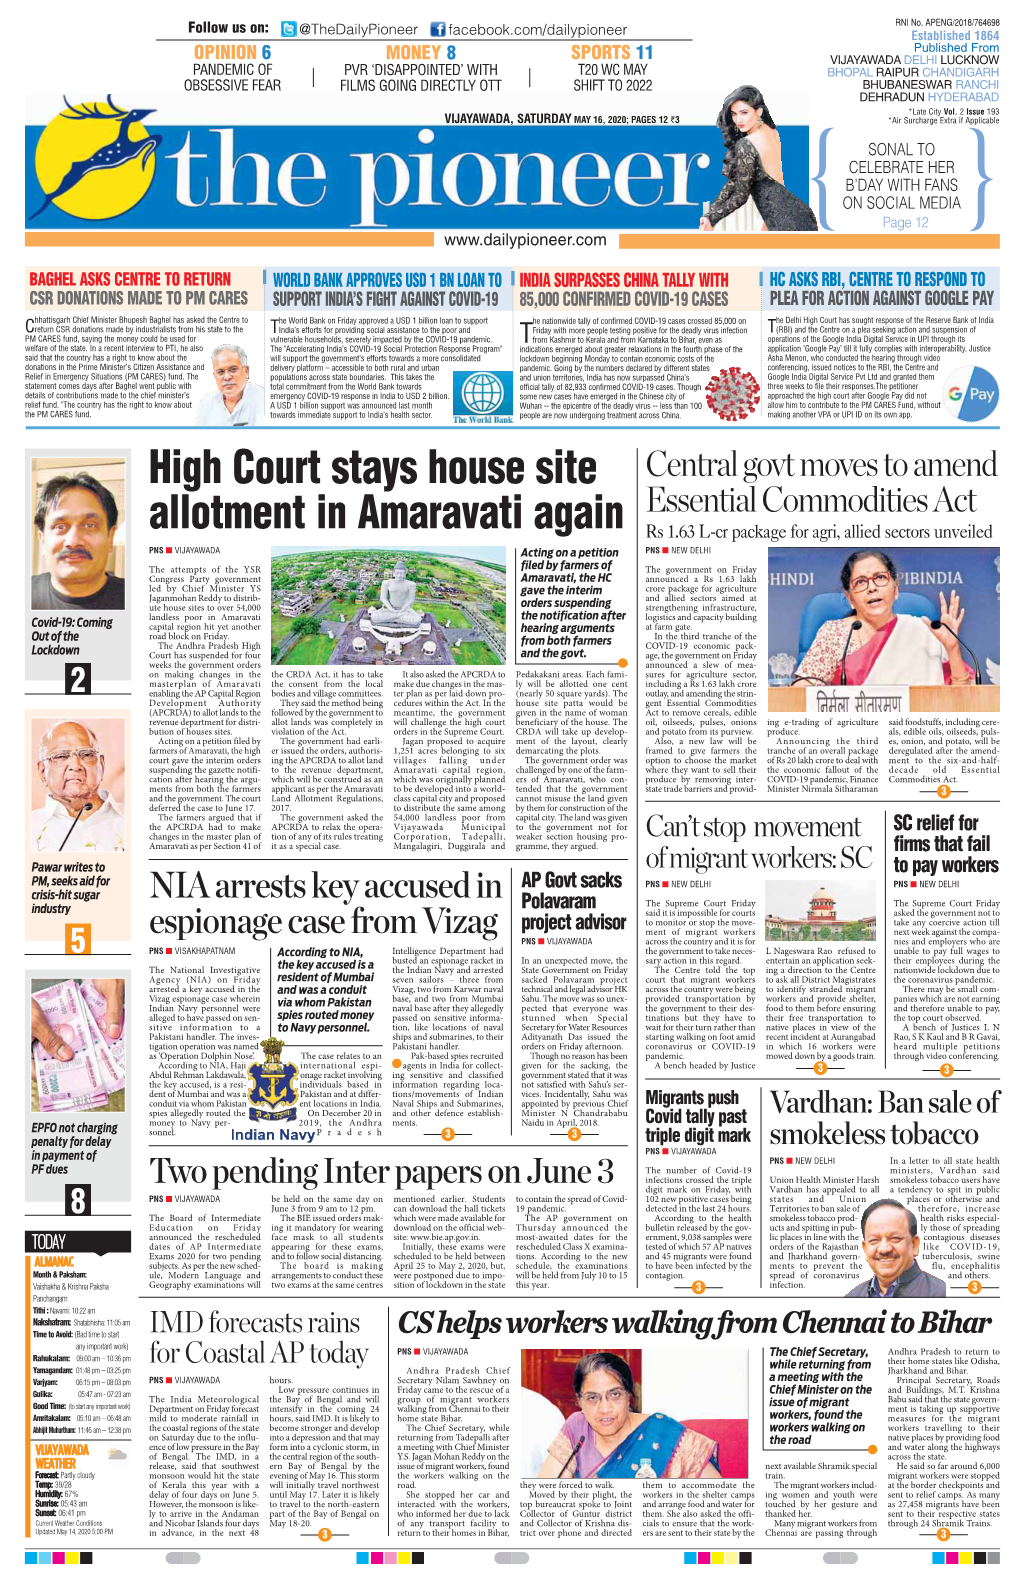 High Court Stays House Site Allotment in Amaravati Again